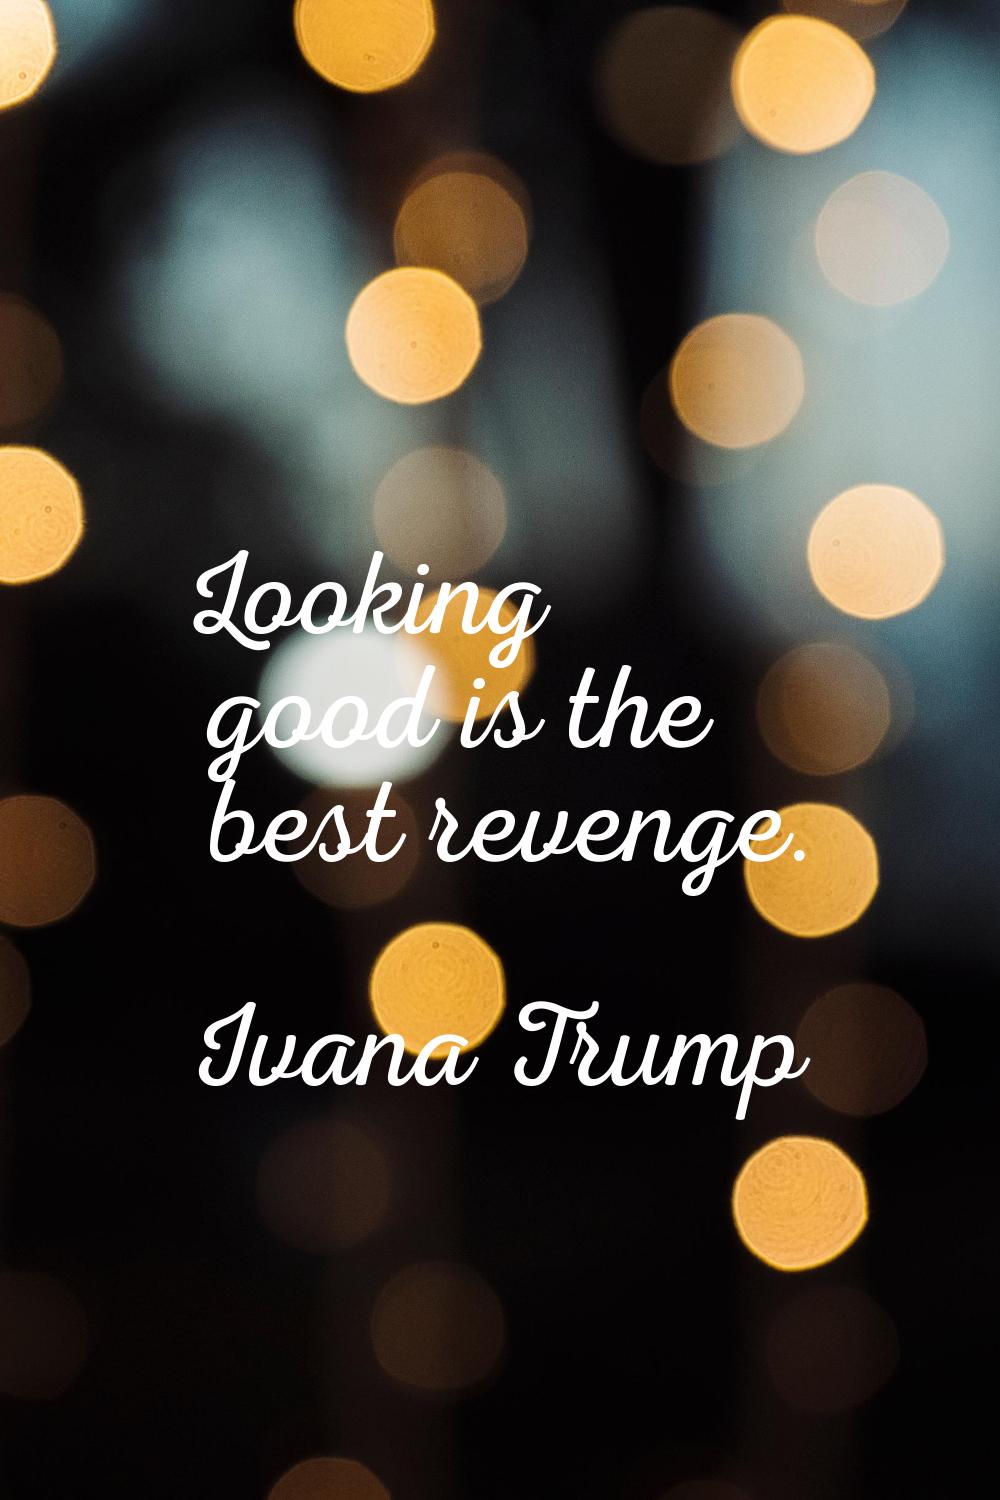 Looking good is the best revenge.